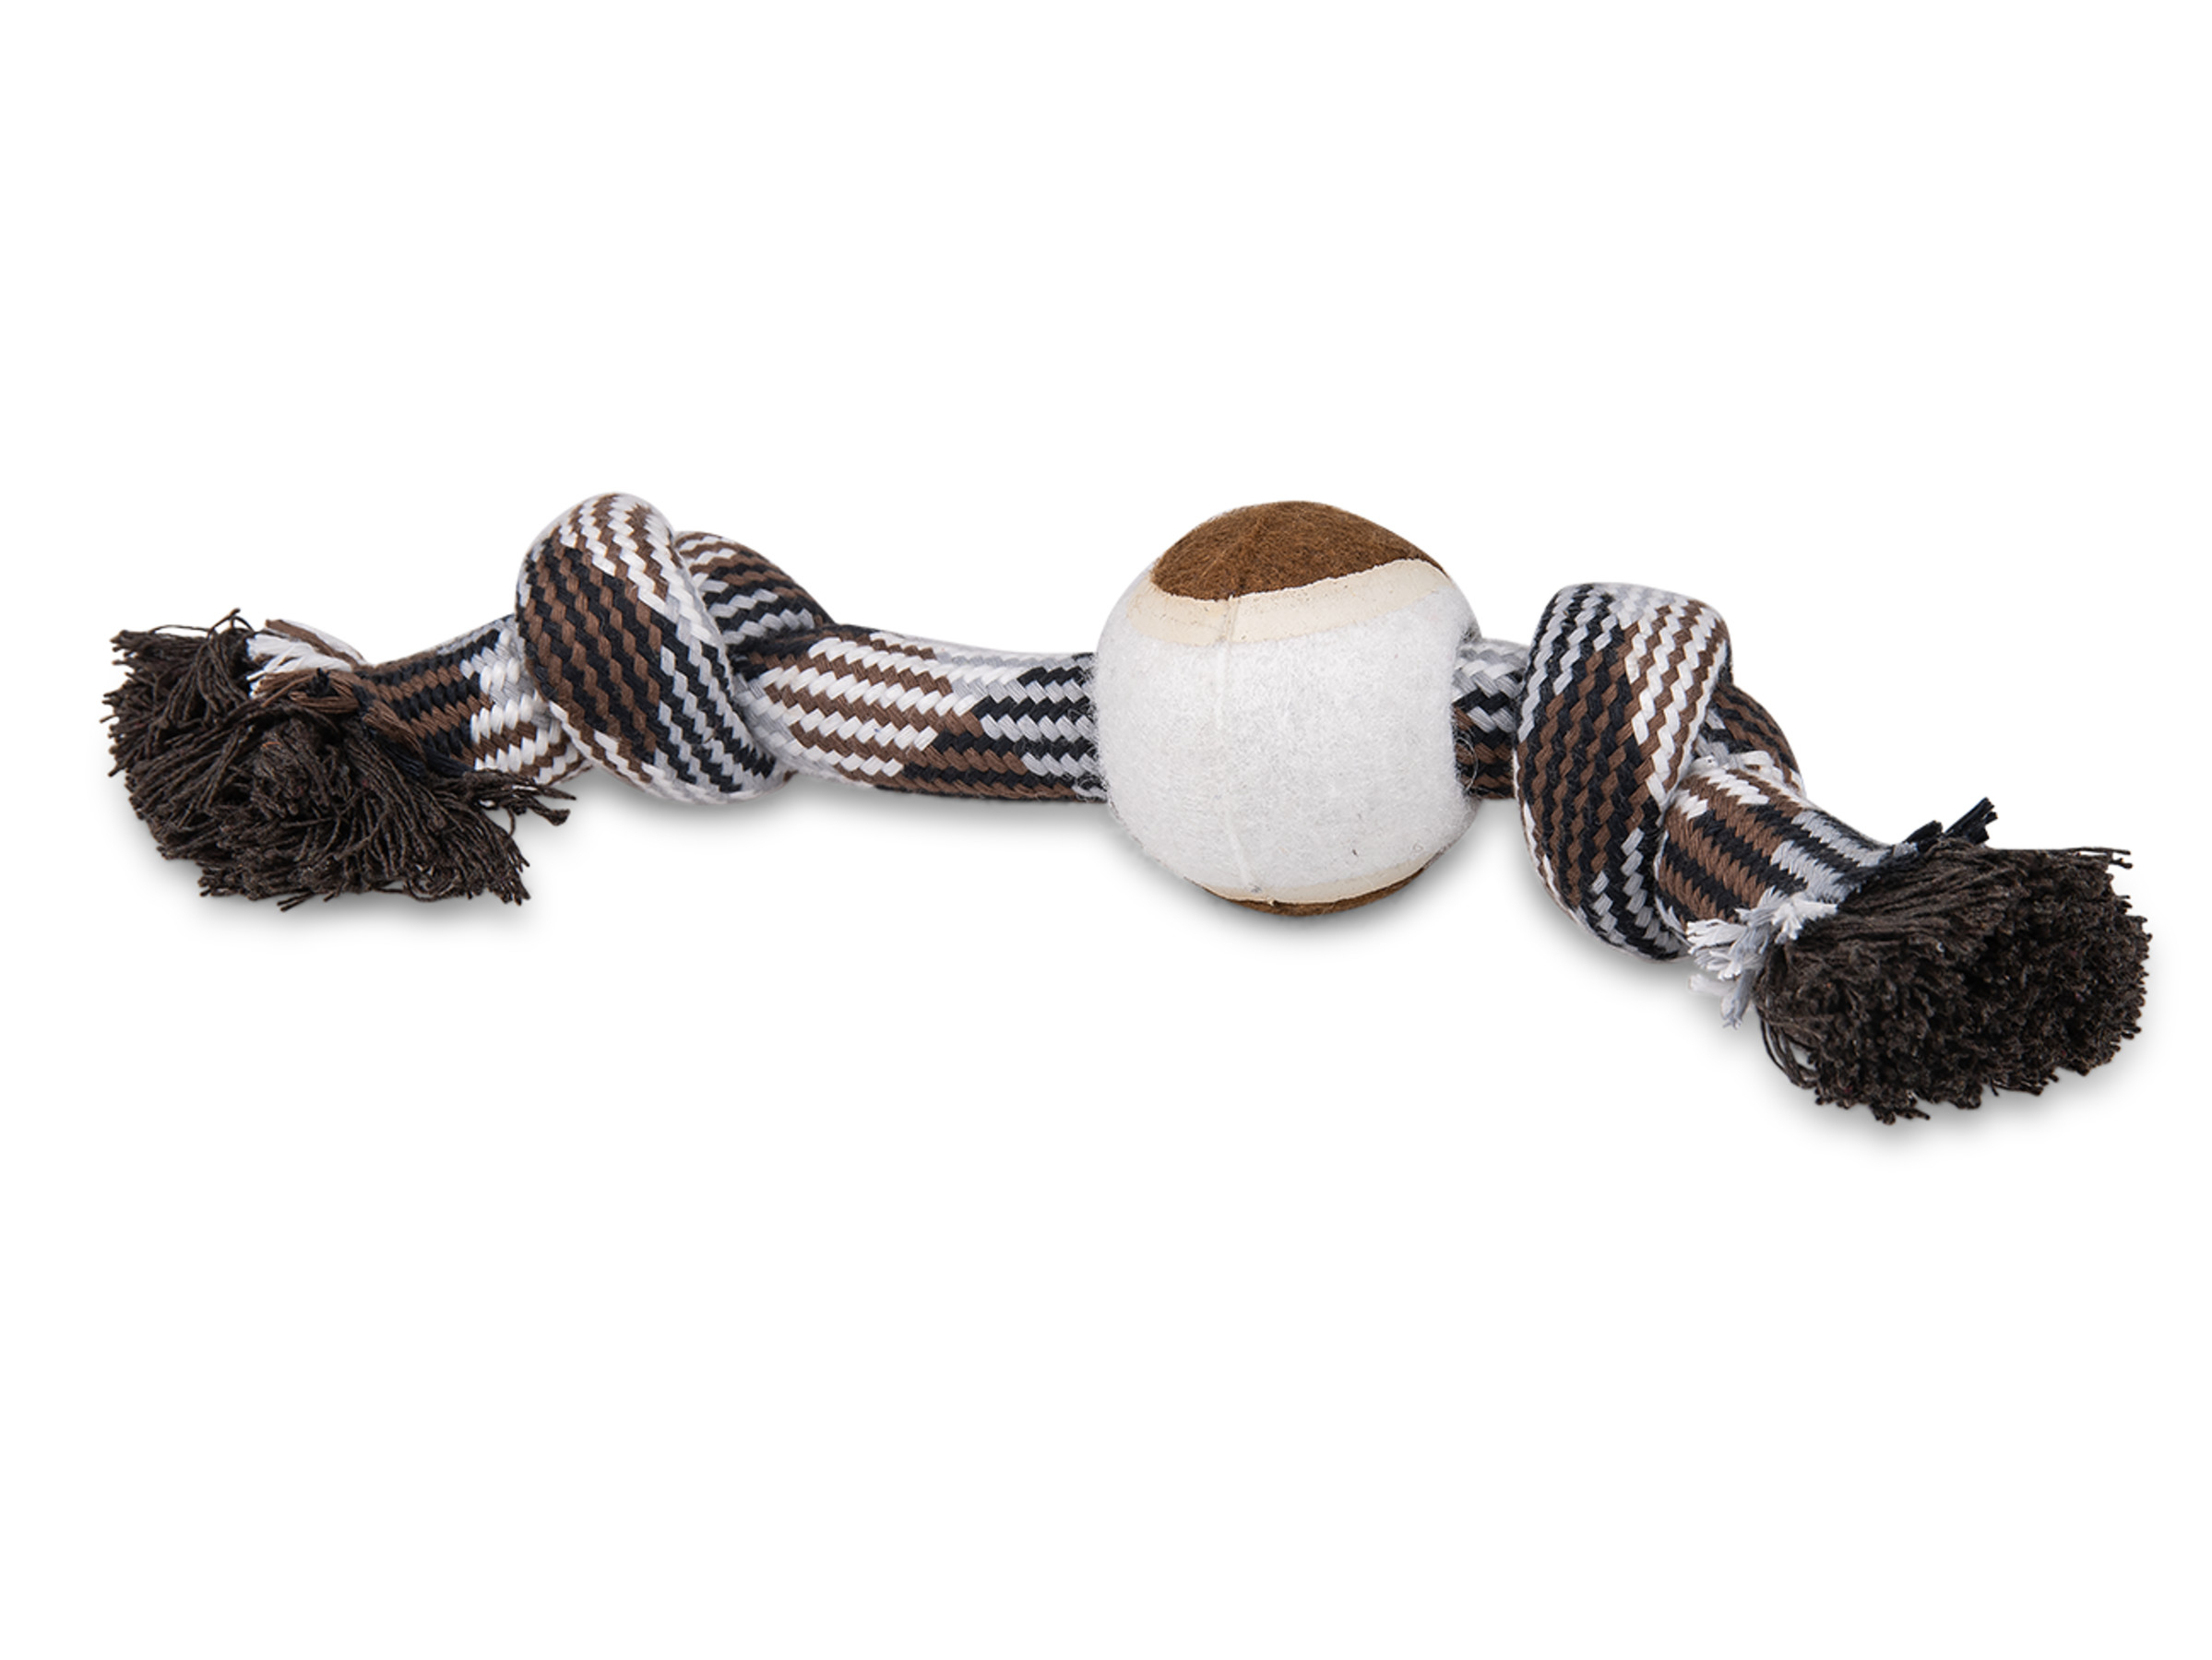 Vadigran Cotton rope 2 knots + tennisball  brown 30cm